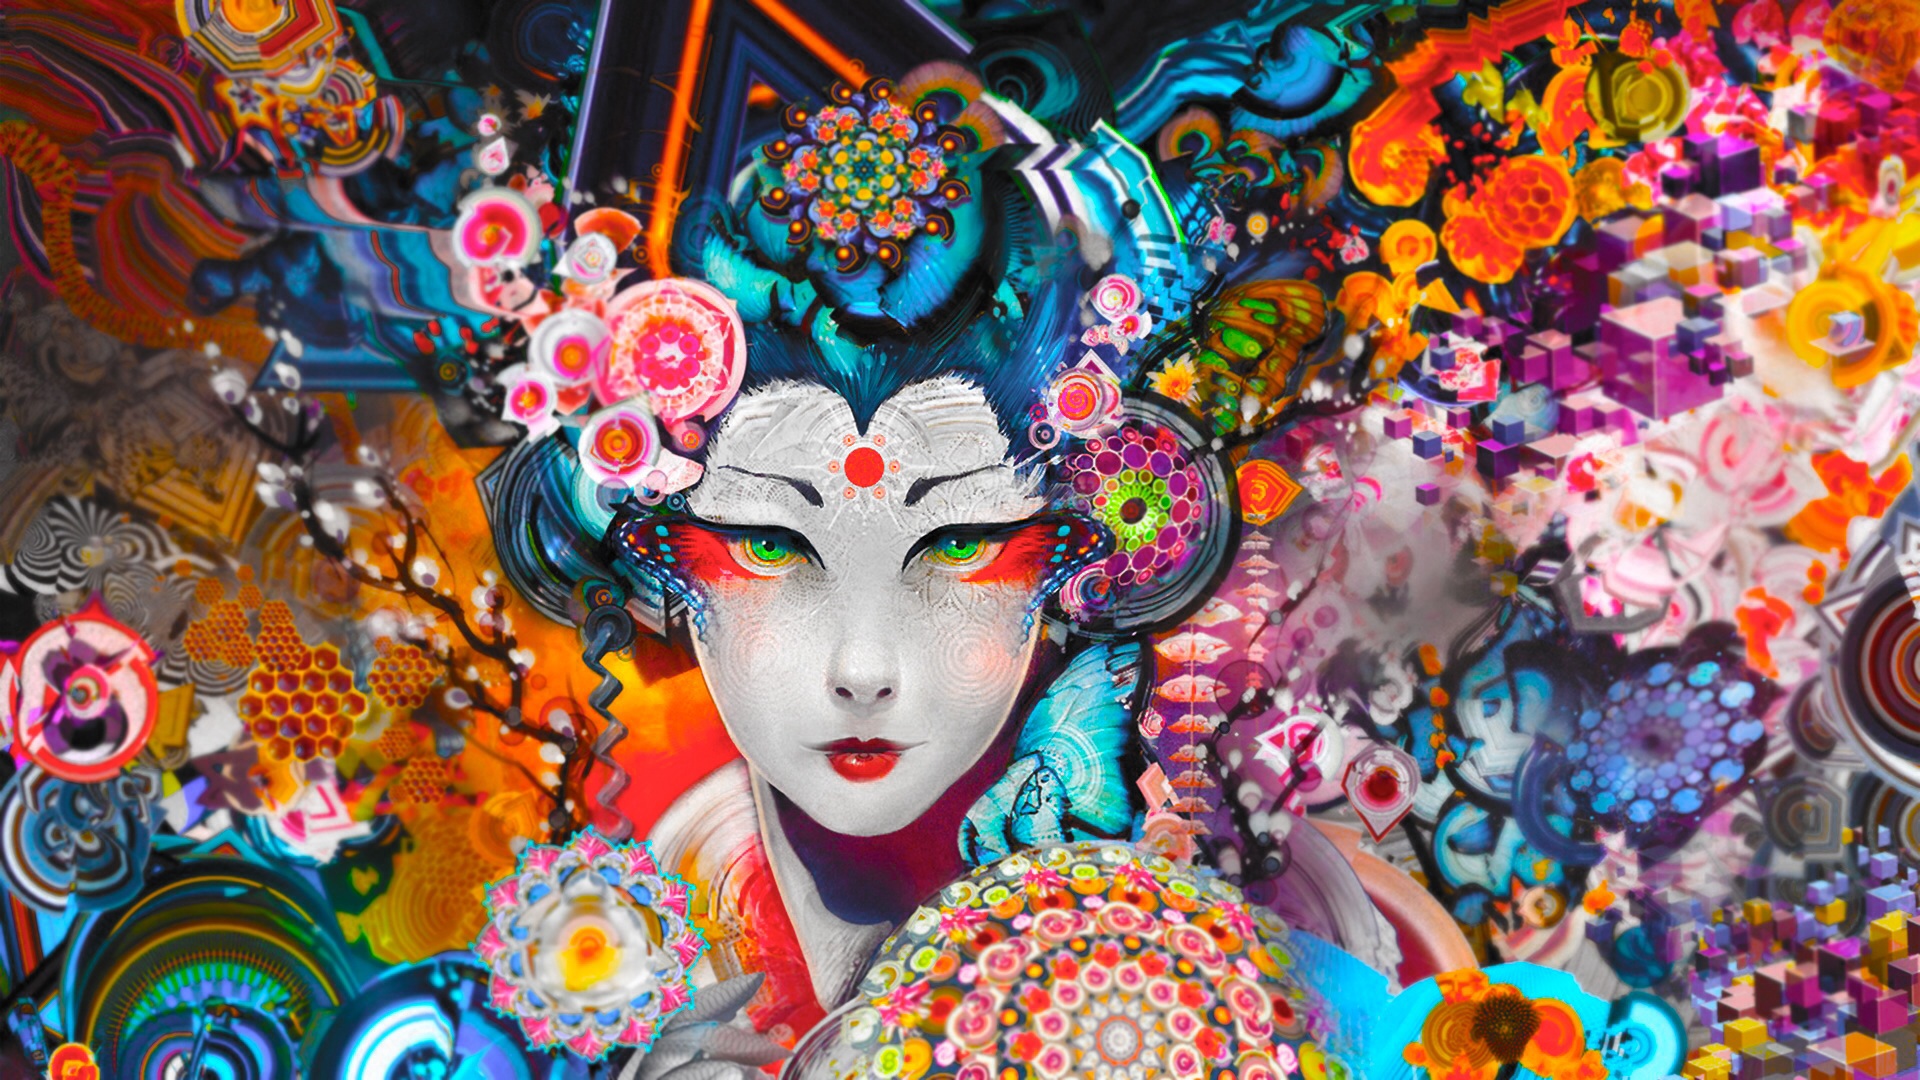 android wallpaper tumblr,psychedelische kunst,kunst,gemälde,buntheit,moderne kunst